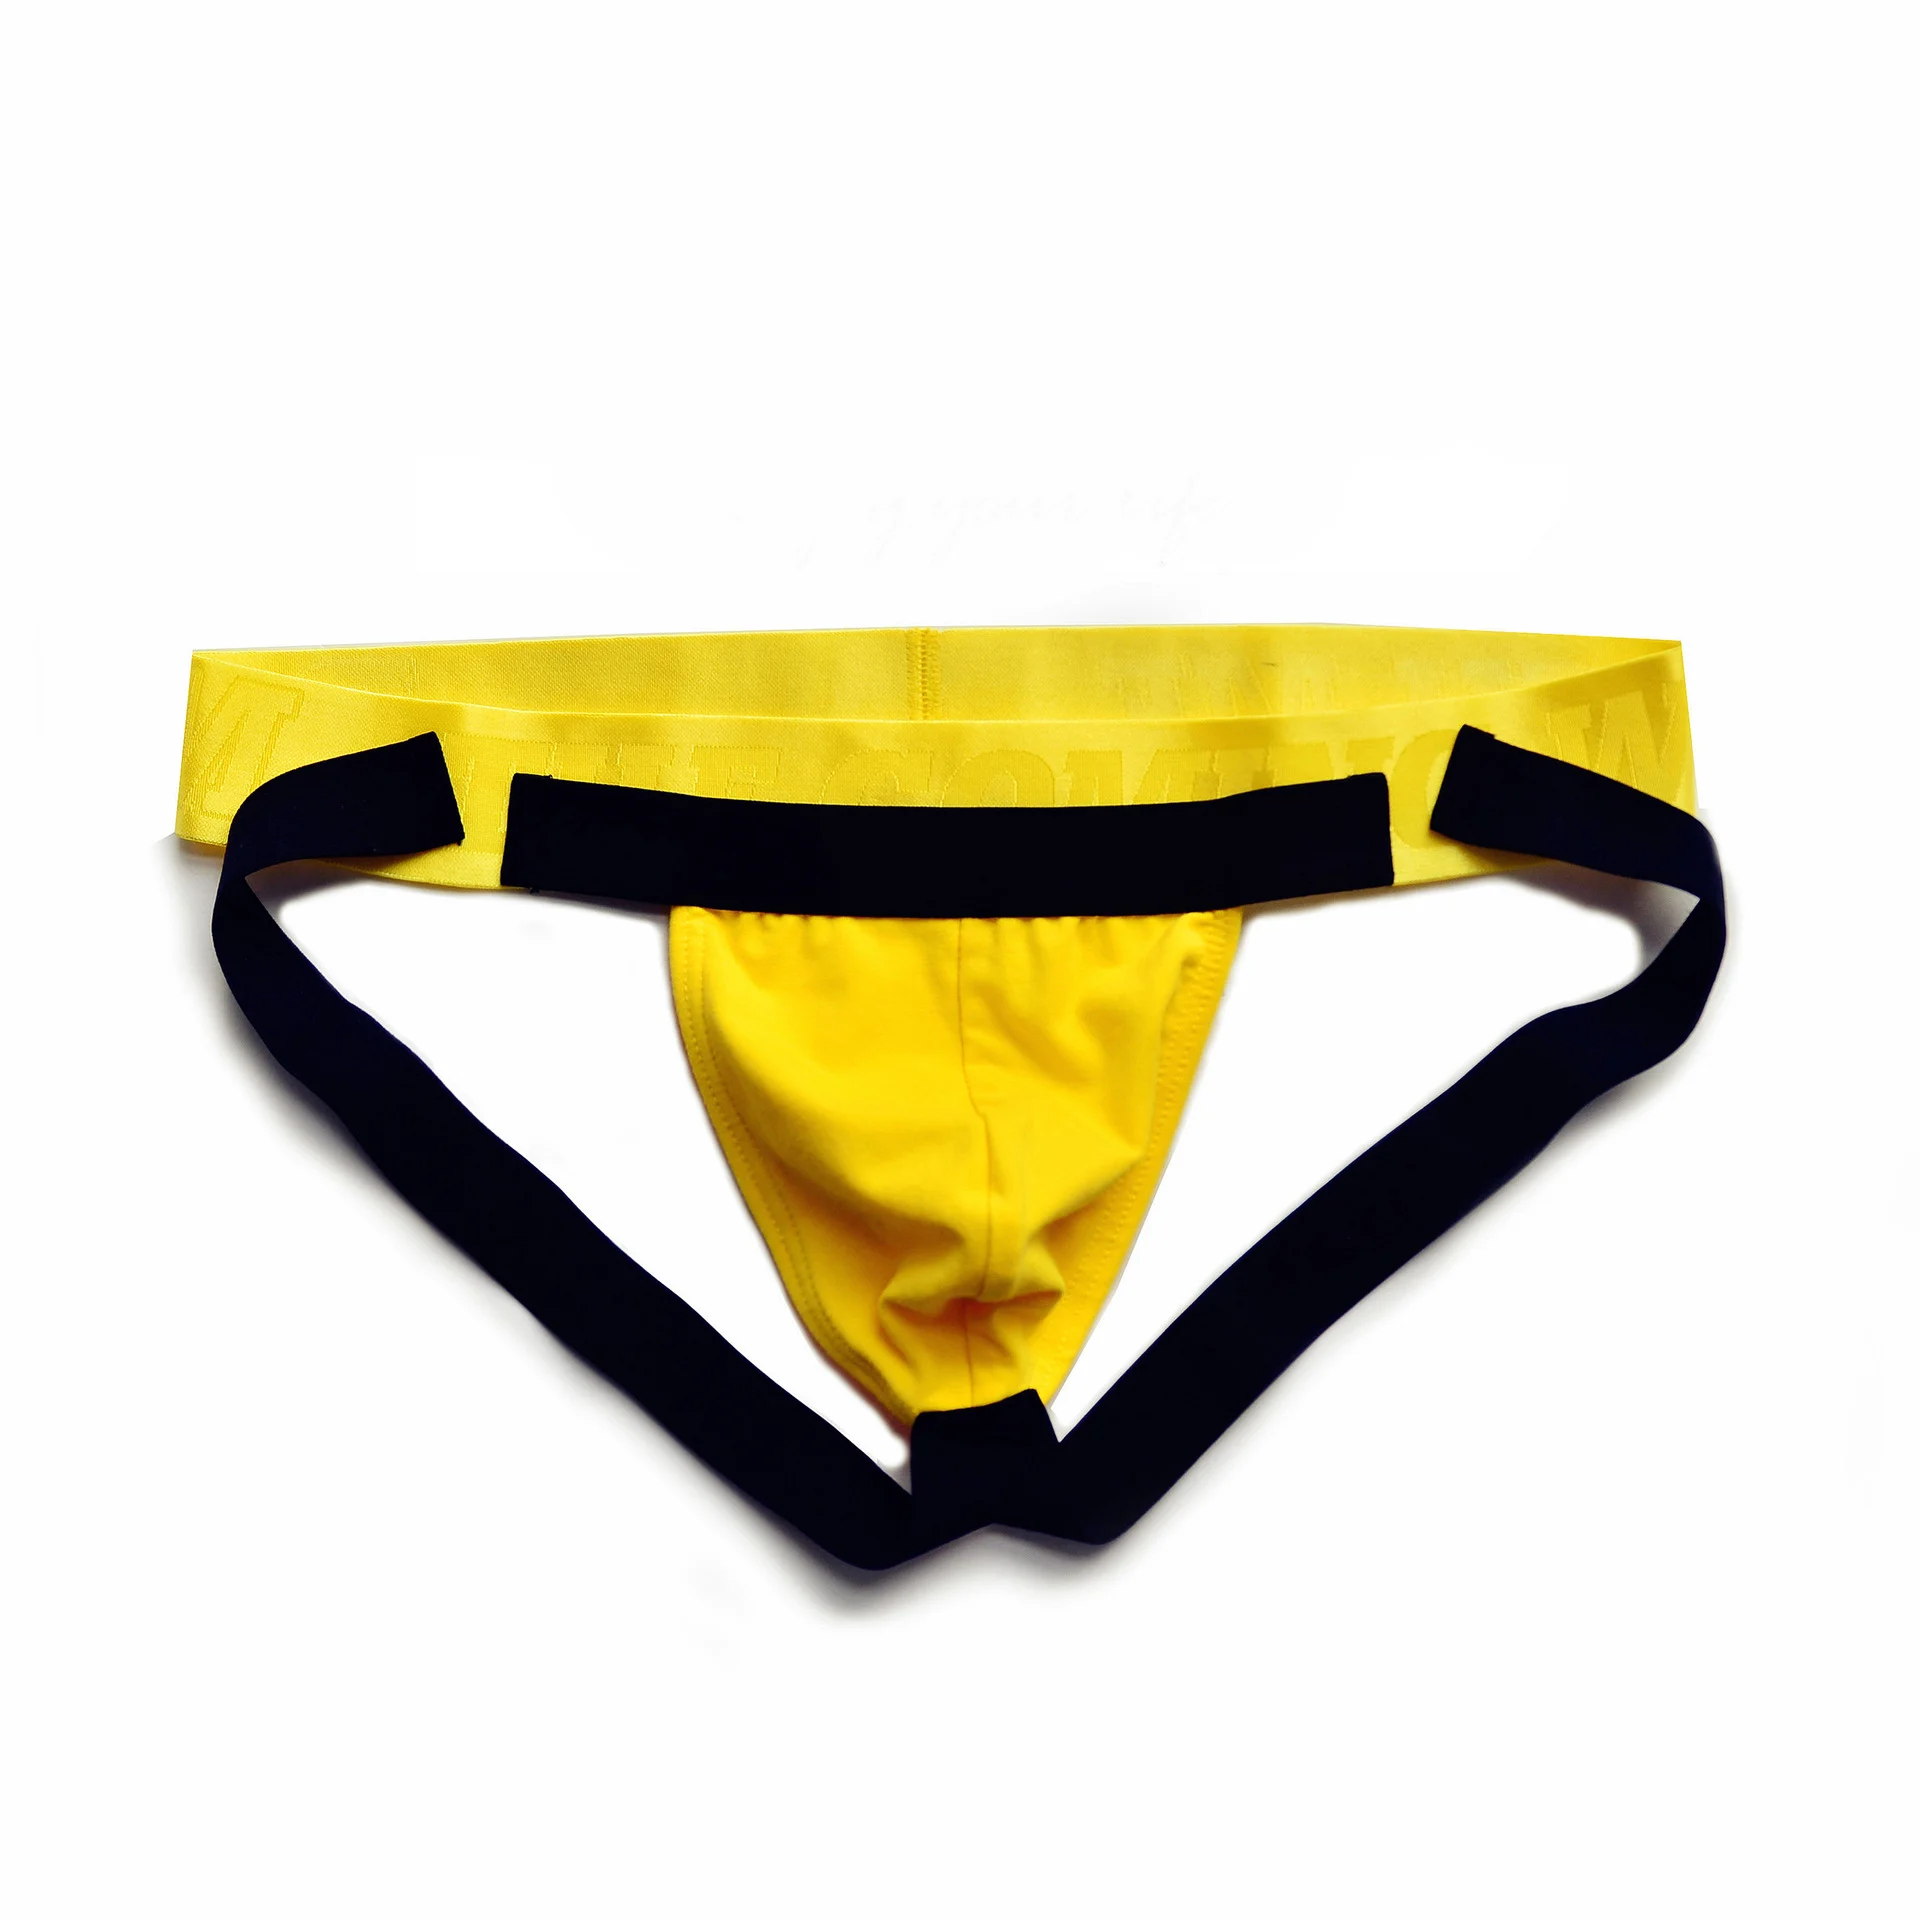 New Men S Underwear Sexy Tide Men S Low Waist Thong Cotton Bright Edge ...